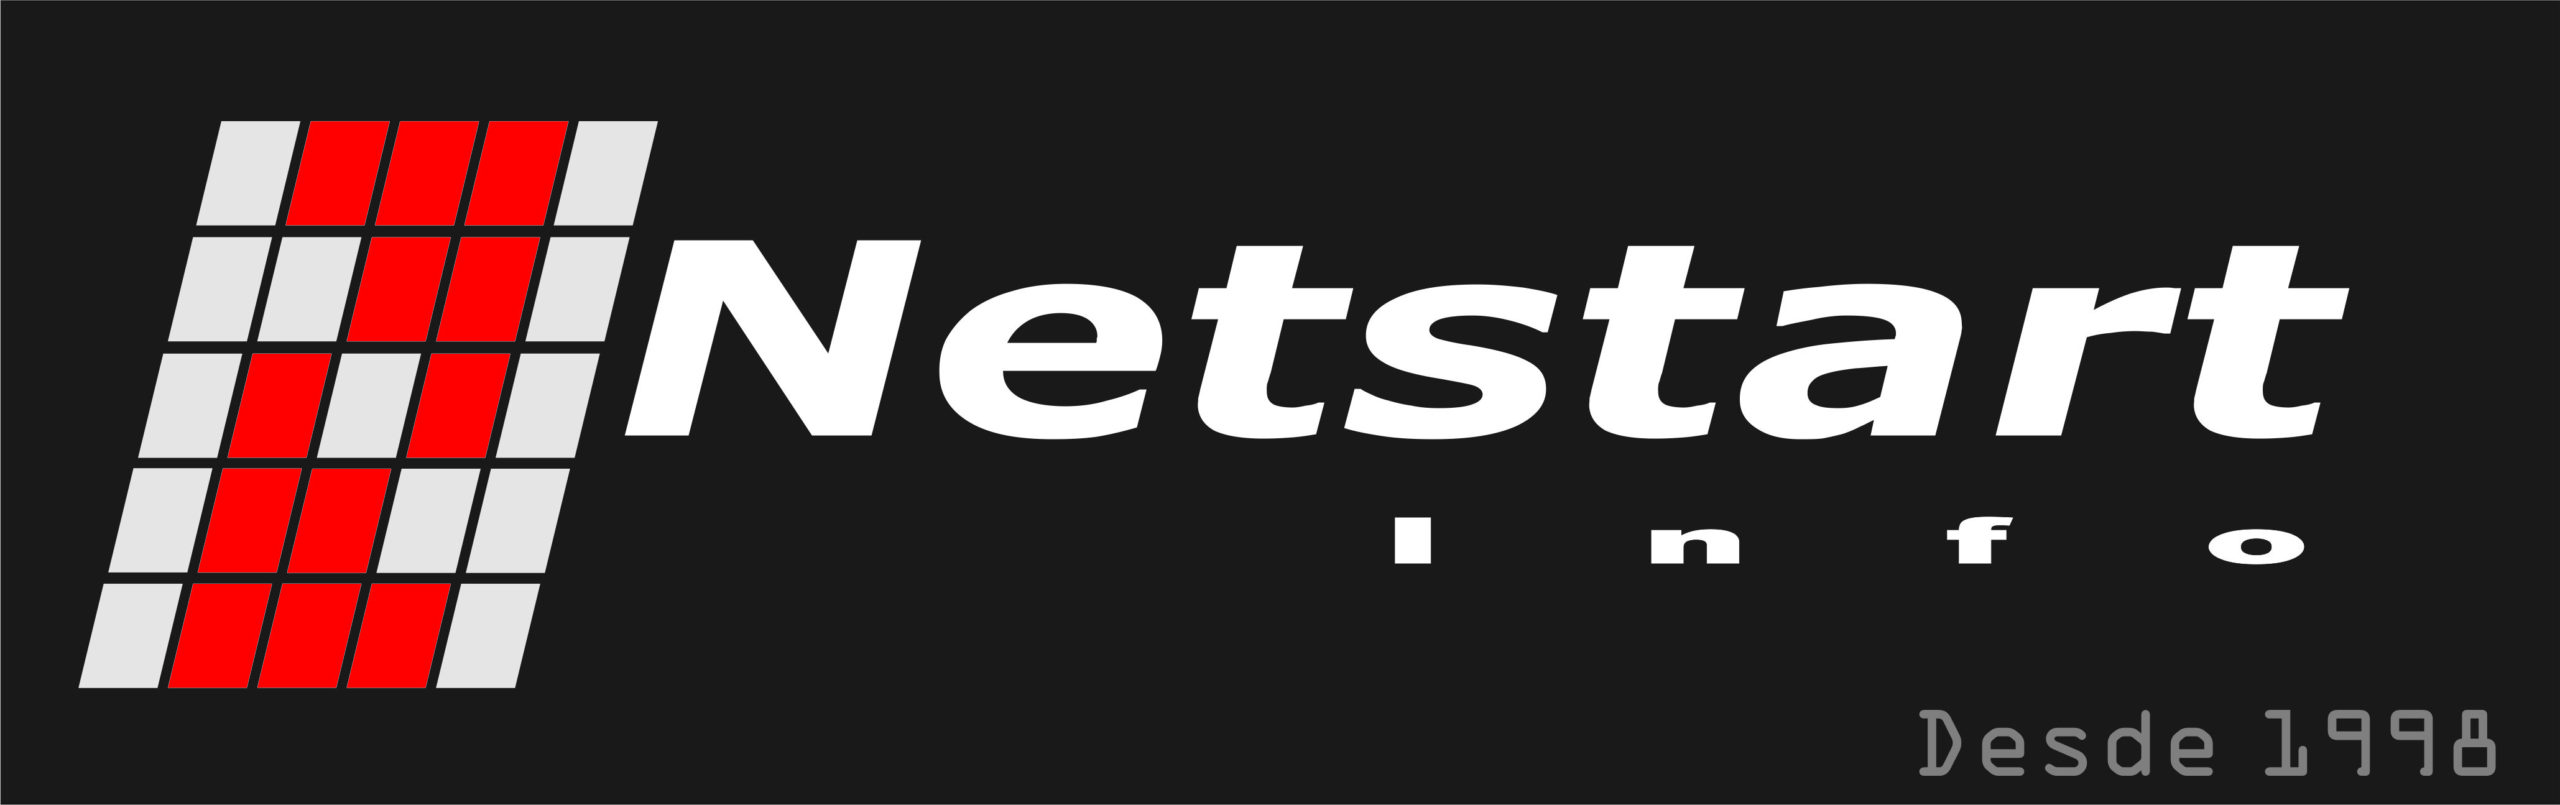 Net Start Logo Desde (1) - Grupo Readapt